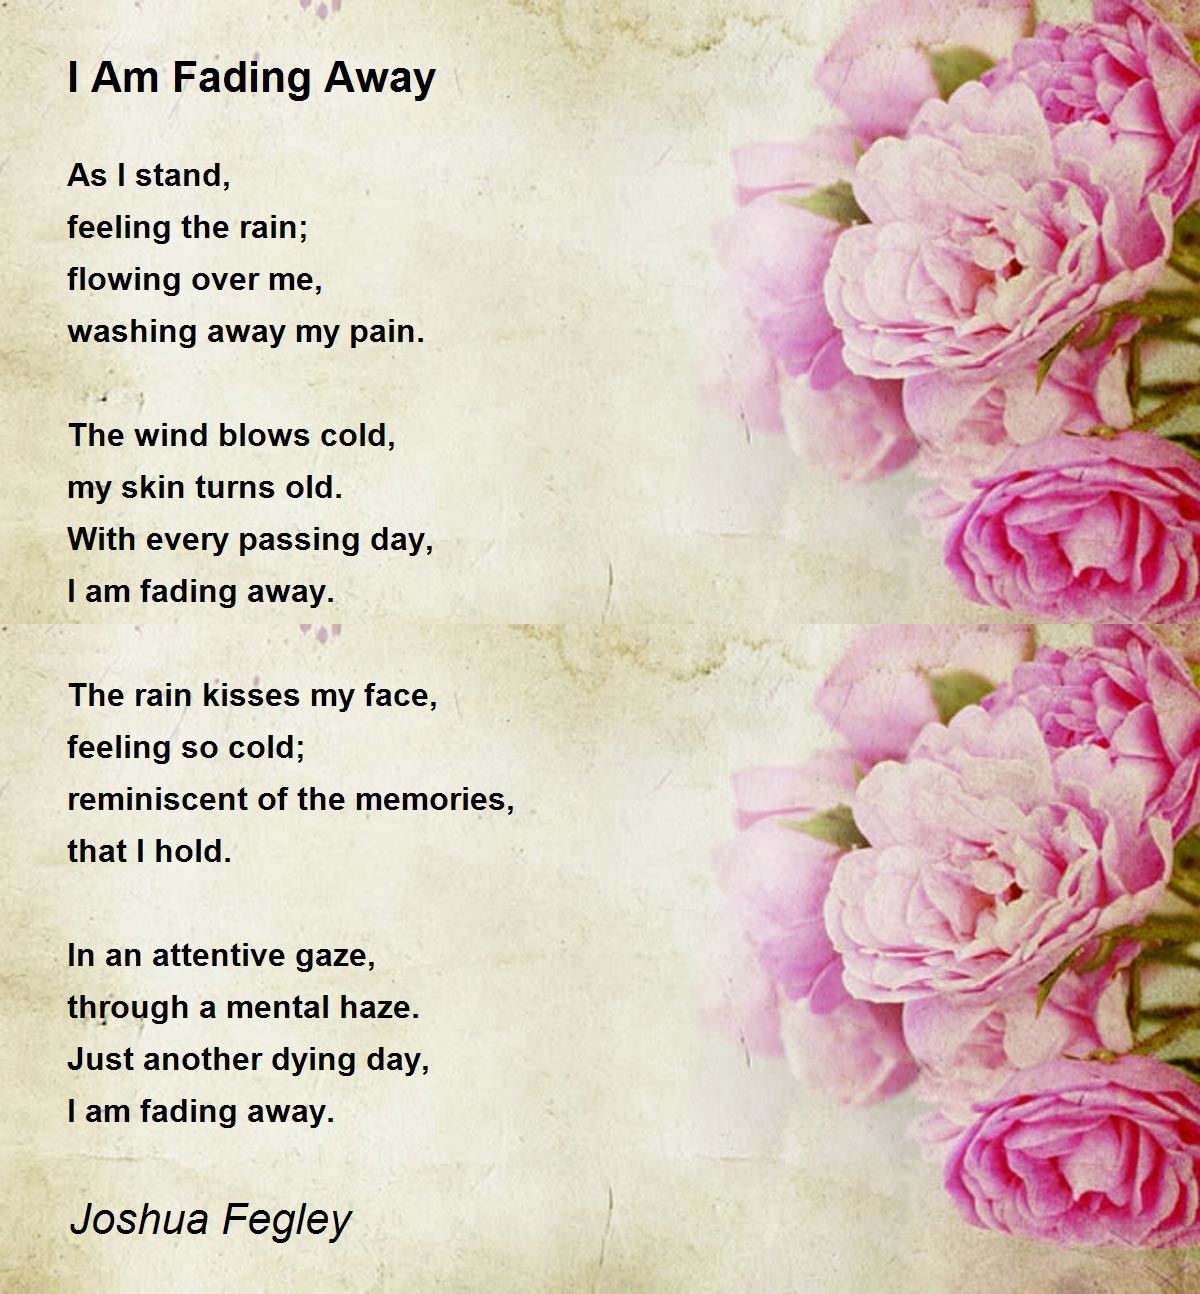 I Am Fading Away Poem by Joshua Fegley - Poem Hunter